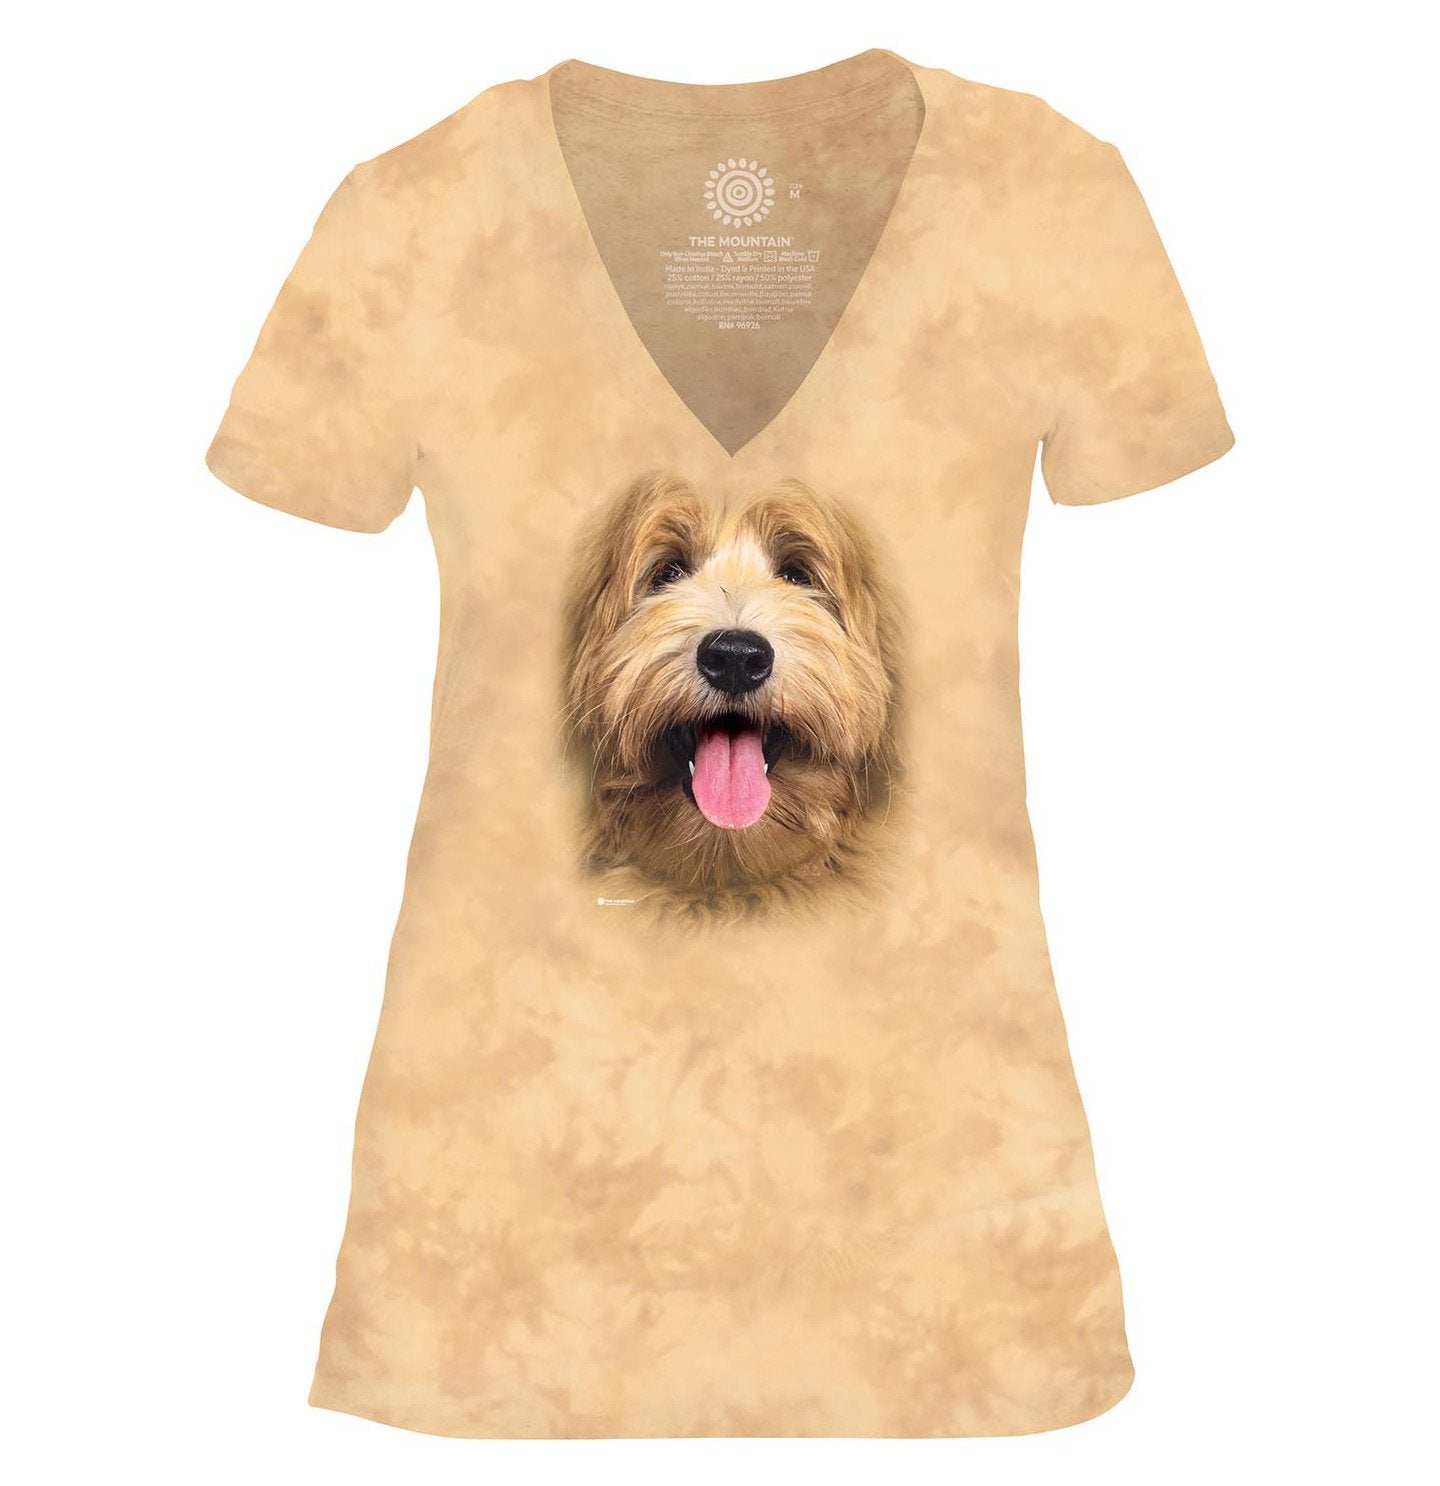 The Mountain - Big Face Labradoodle Pup - Women's Tri-Blend V-Neck T-Shirt